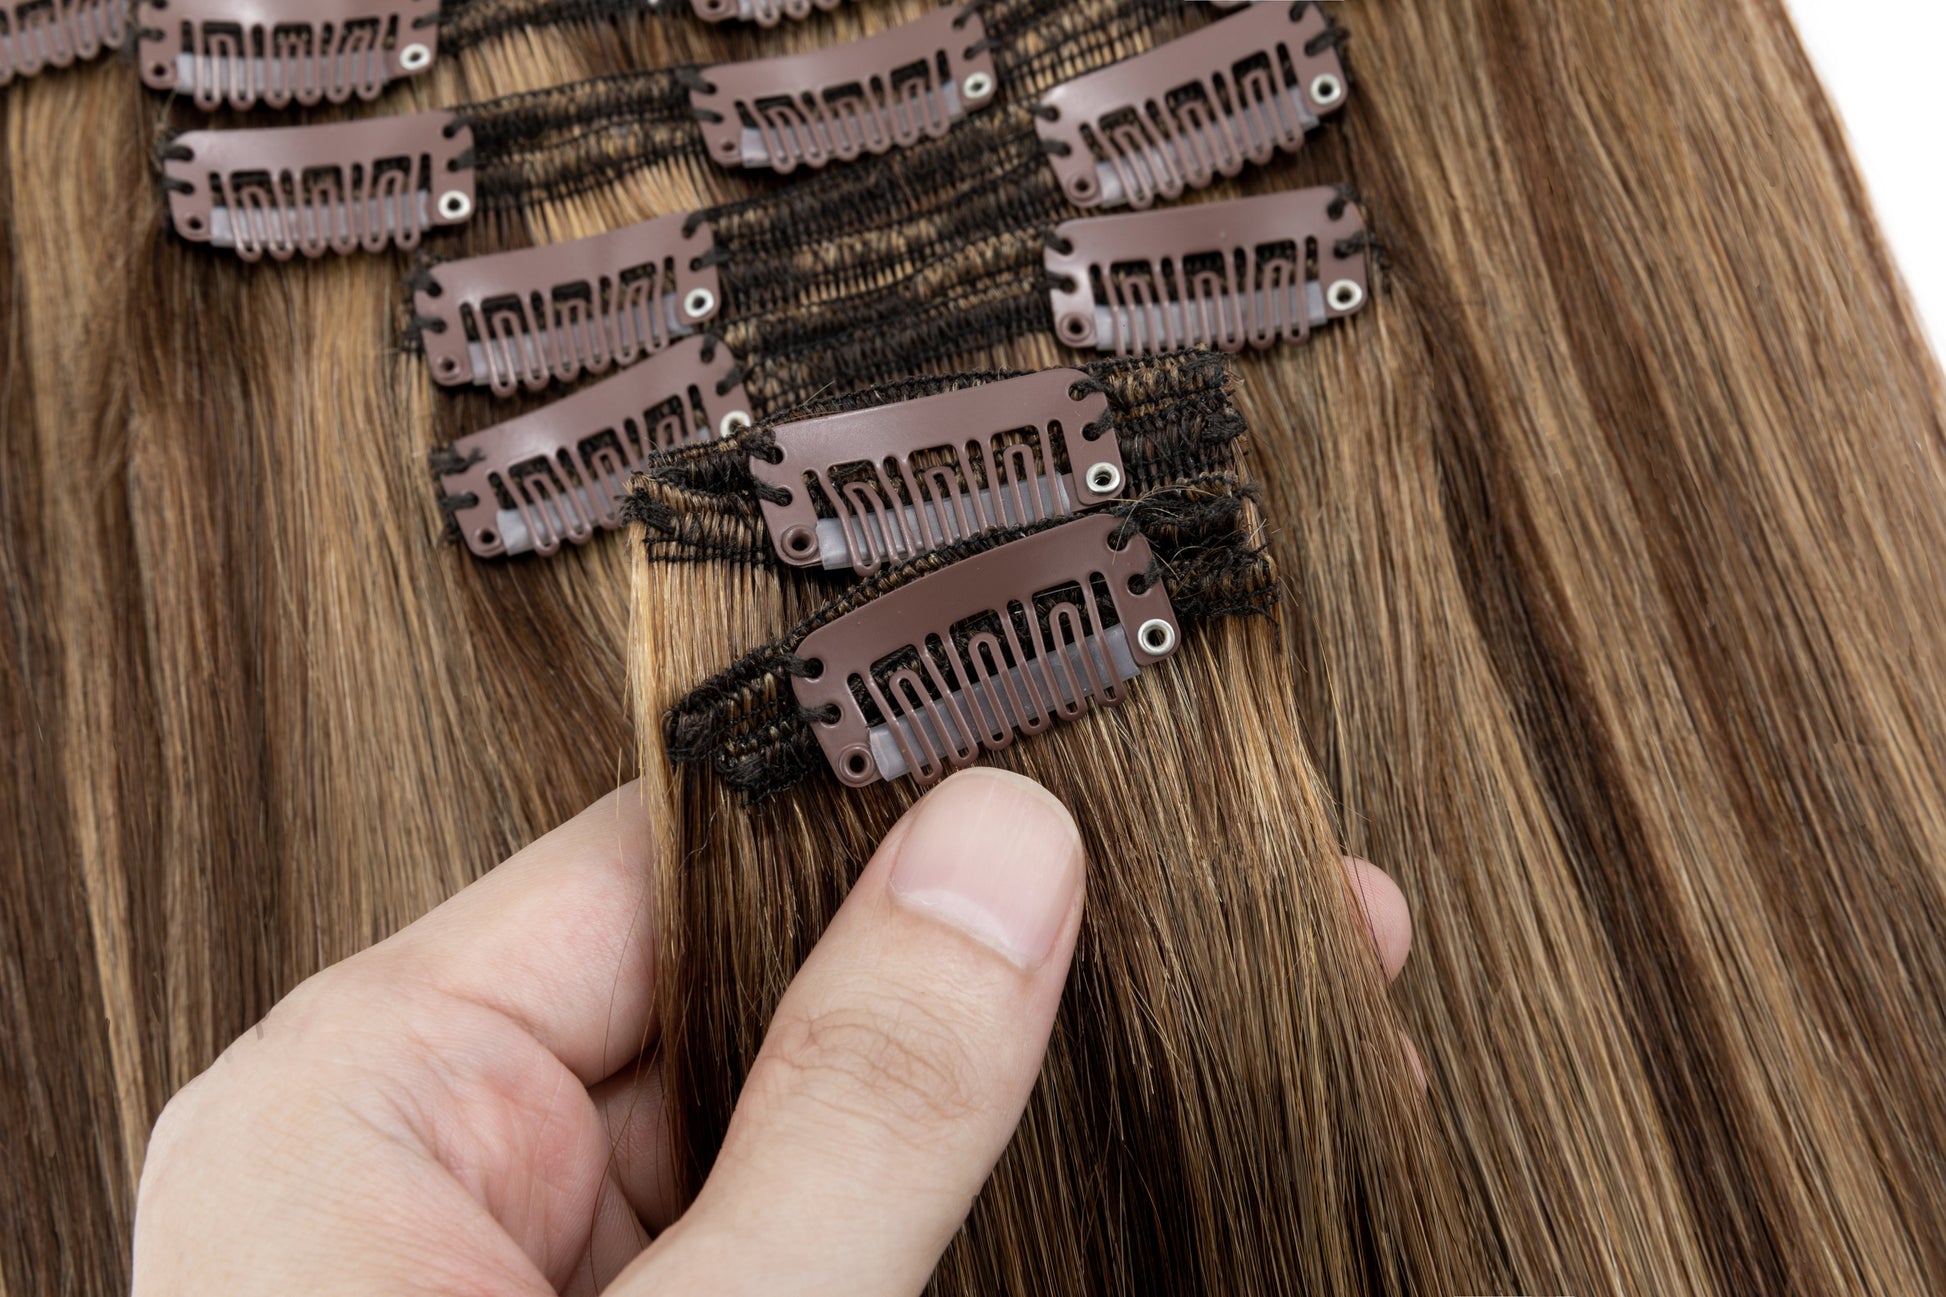 SEGOHAIR 8pcs Clip In Hair Extensions Real Human Hair Chocolate Brown Strawberry Honey Blonde segohair.com